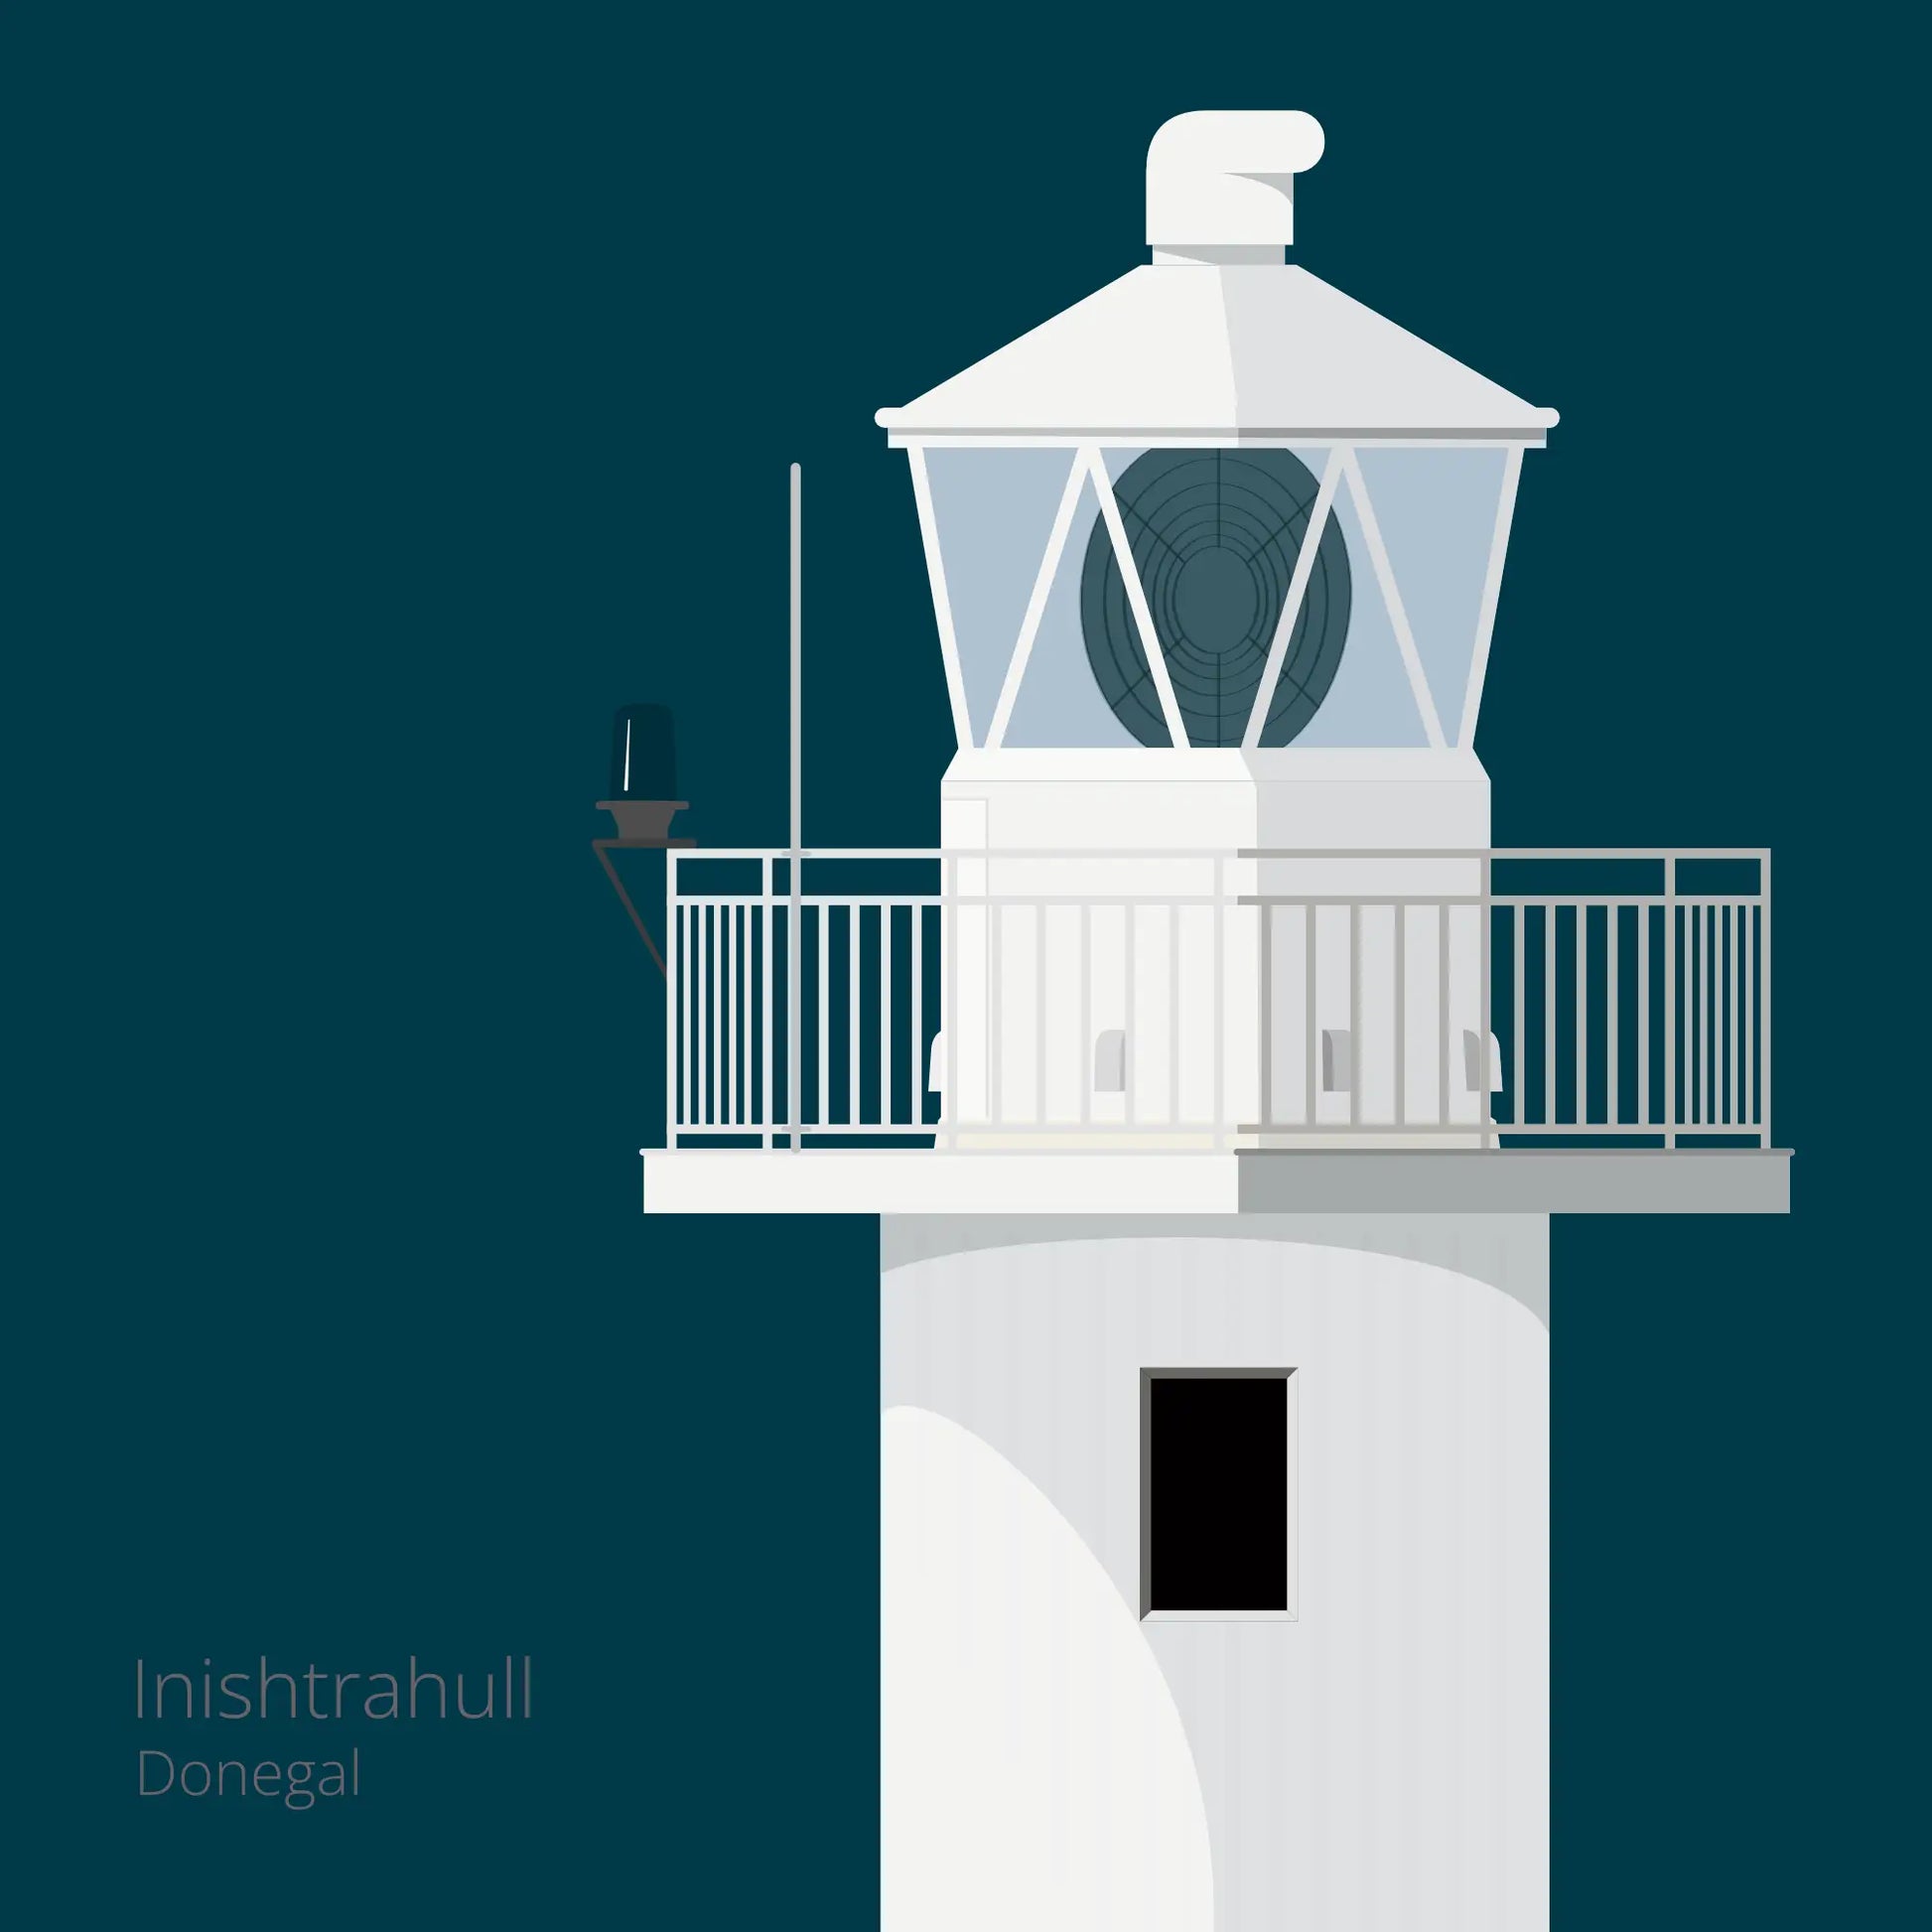 Illustration of Inishtrahull lighthouse on a midnight blue background